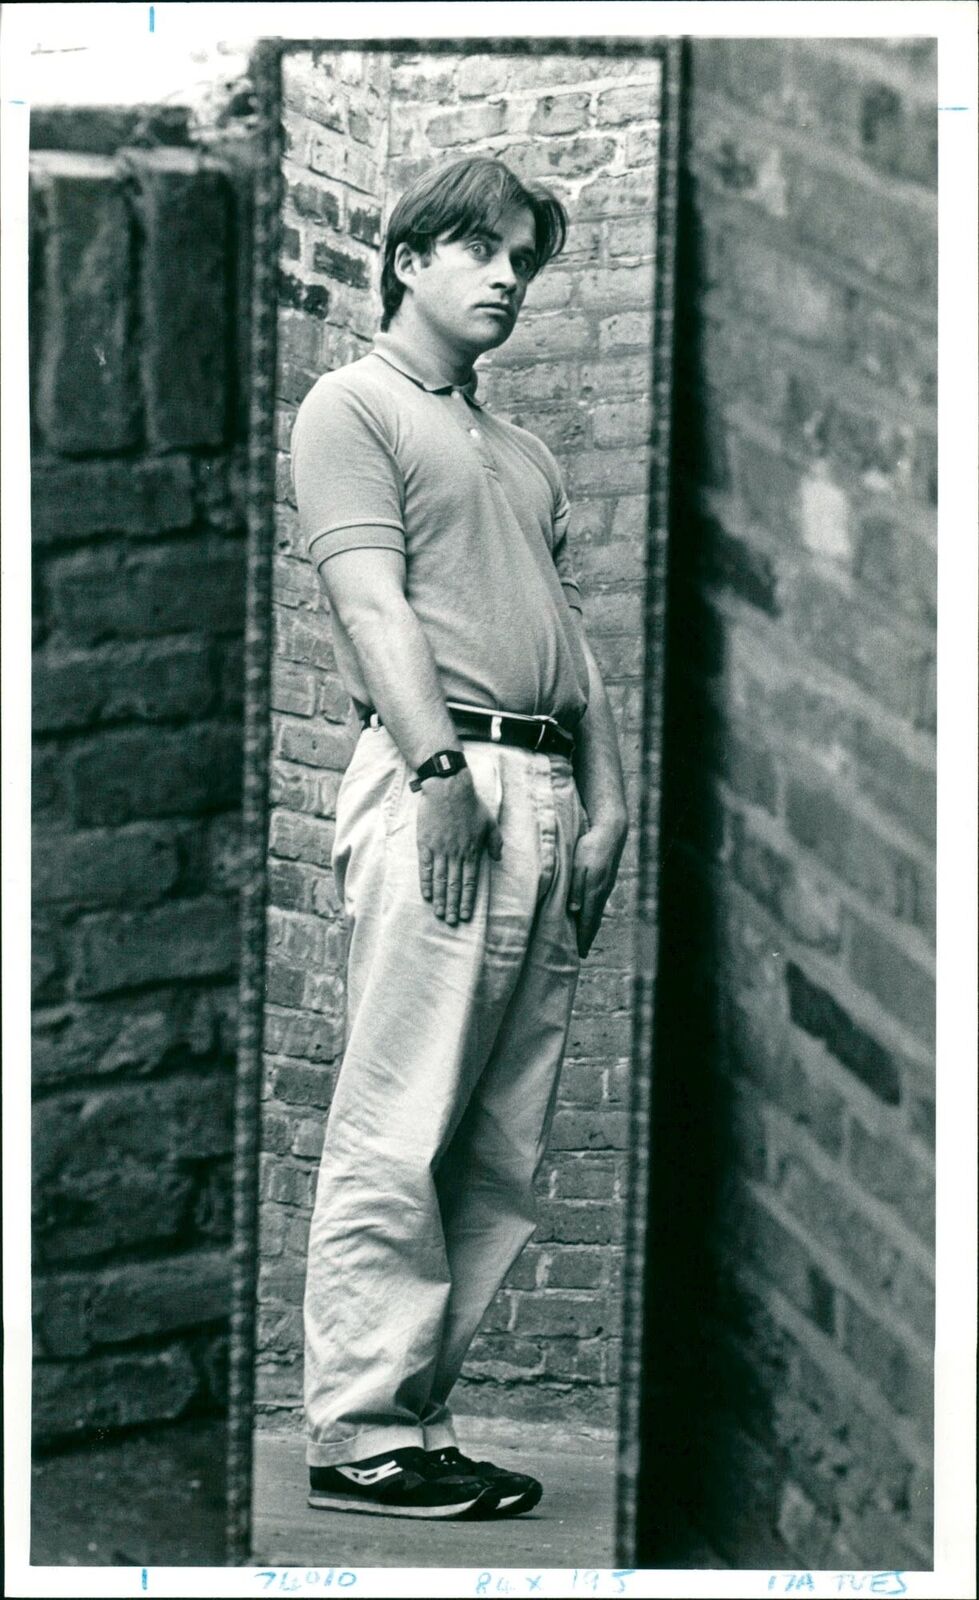 1953 - ENFIELD HARRY ACTOR FOLDER MUGIN BY MELA... - Vintage Photograph 3847640